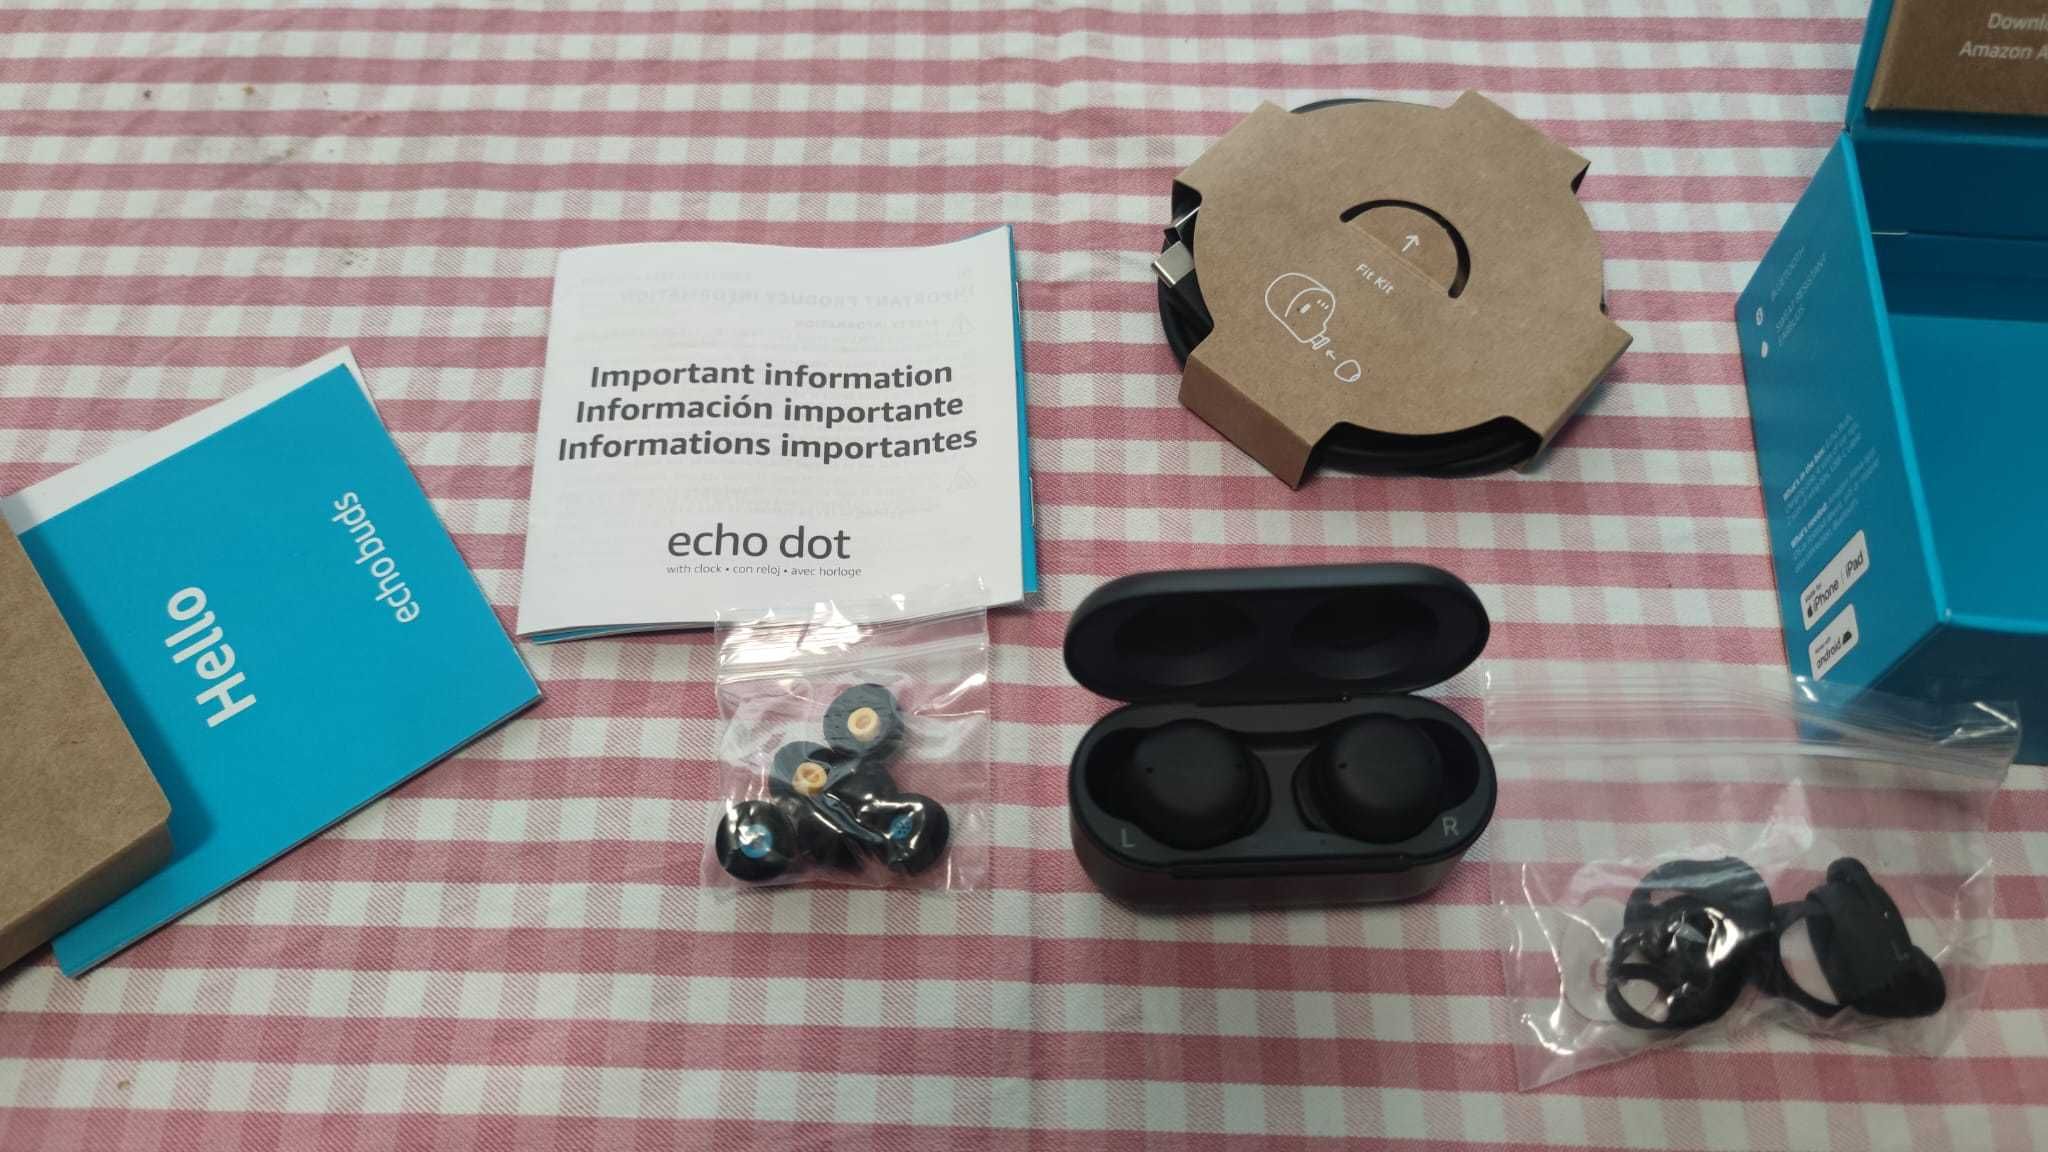 Casi in-ear Echo Buds, by Amazon, Alexa compatible